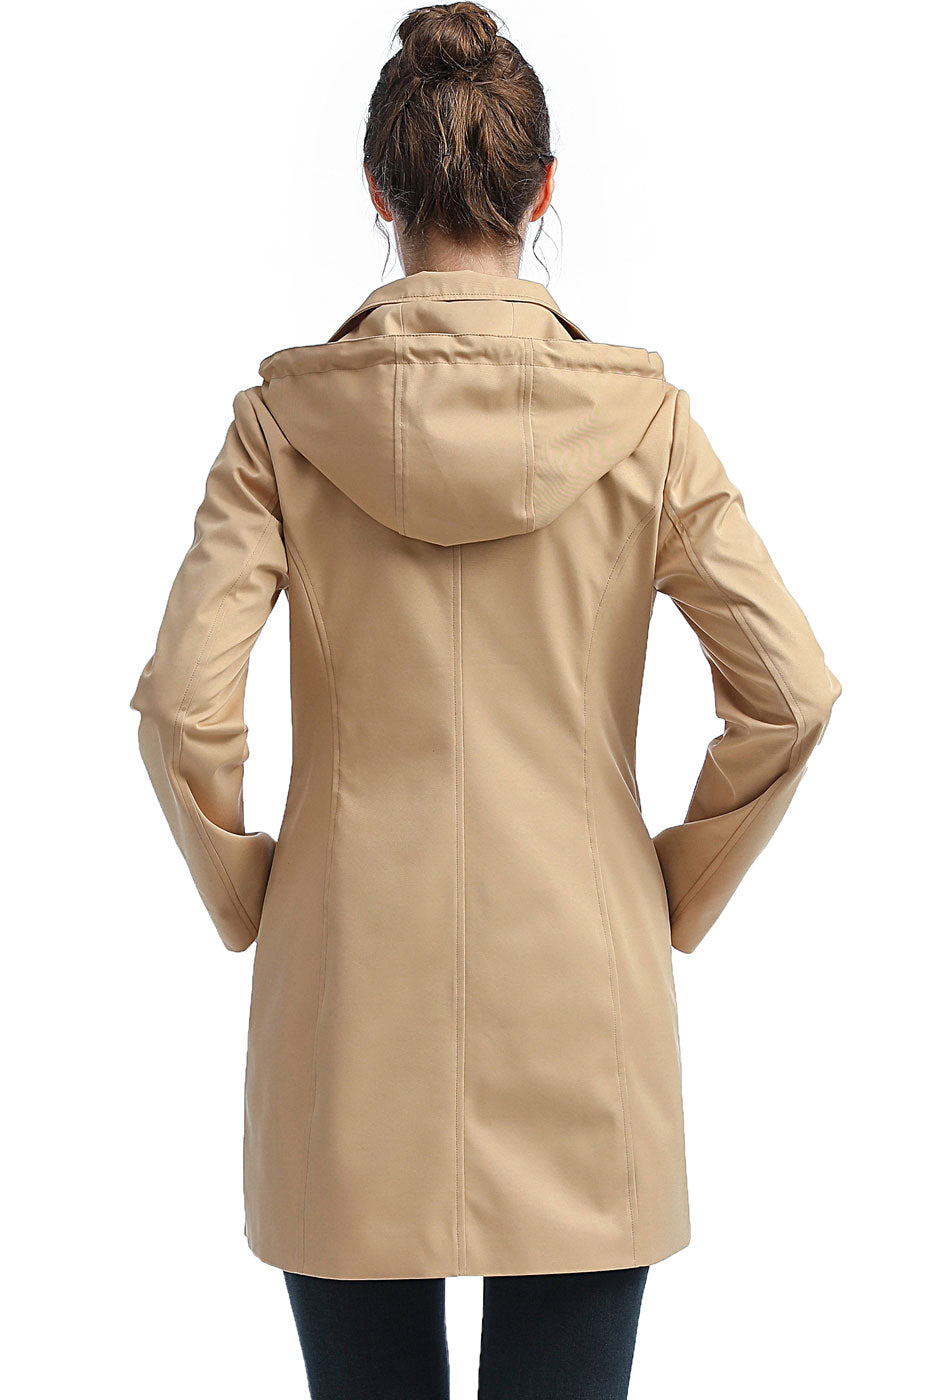 BGSD Women Easton Waterproof Hooded Anorak Jacket